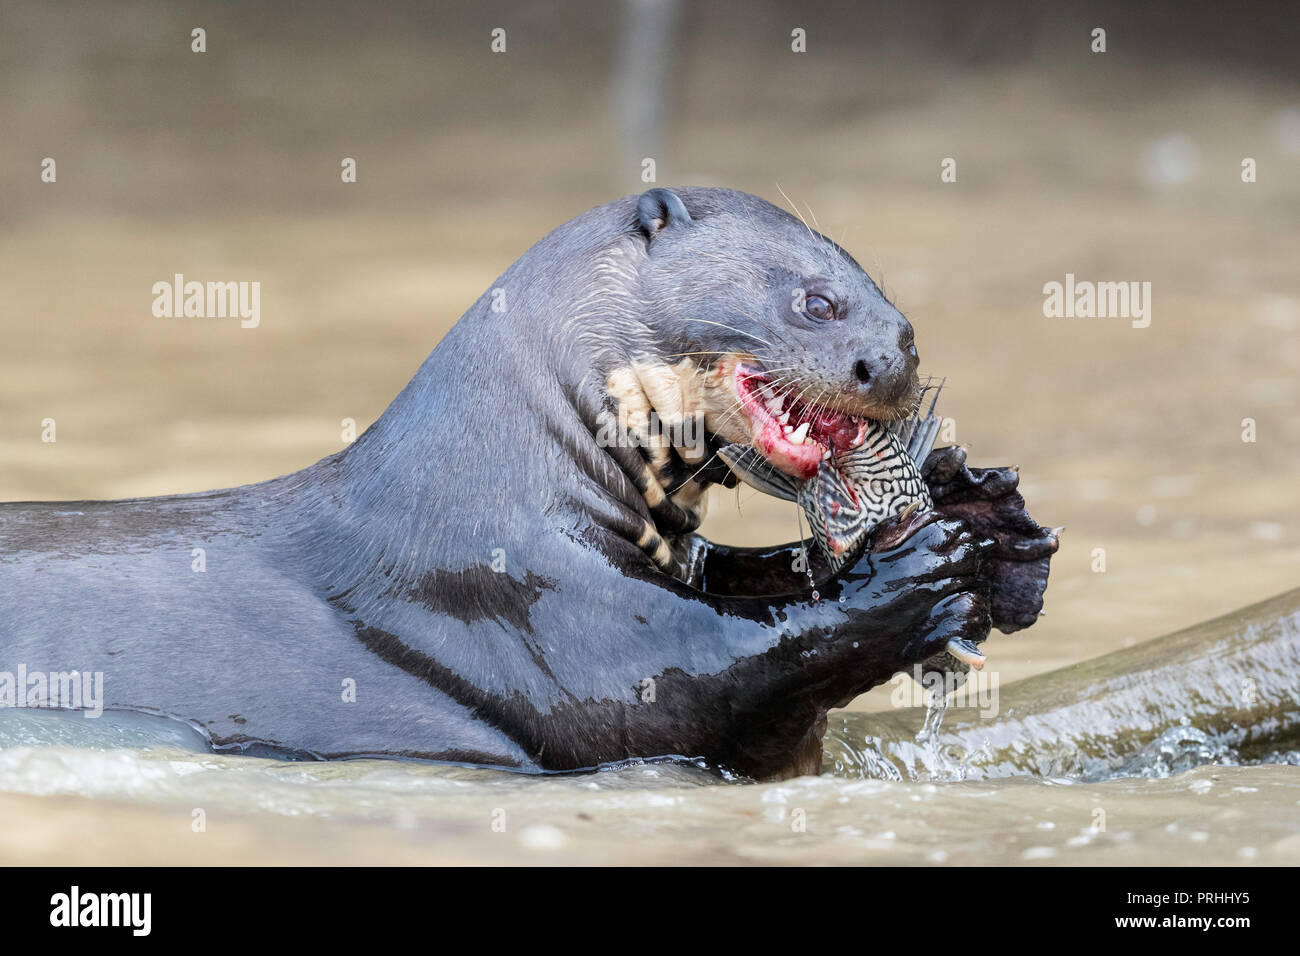 Giant river otter eating a fish, Pteronura brasiliensis, feeding near ...